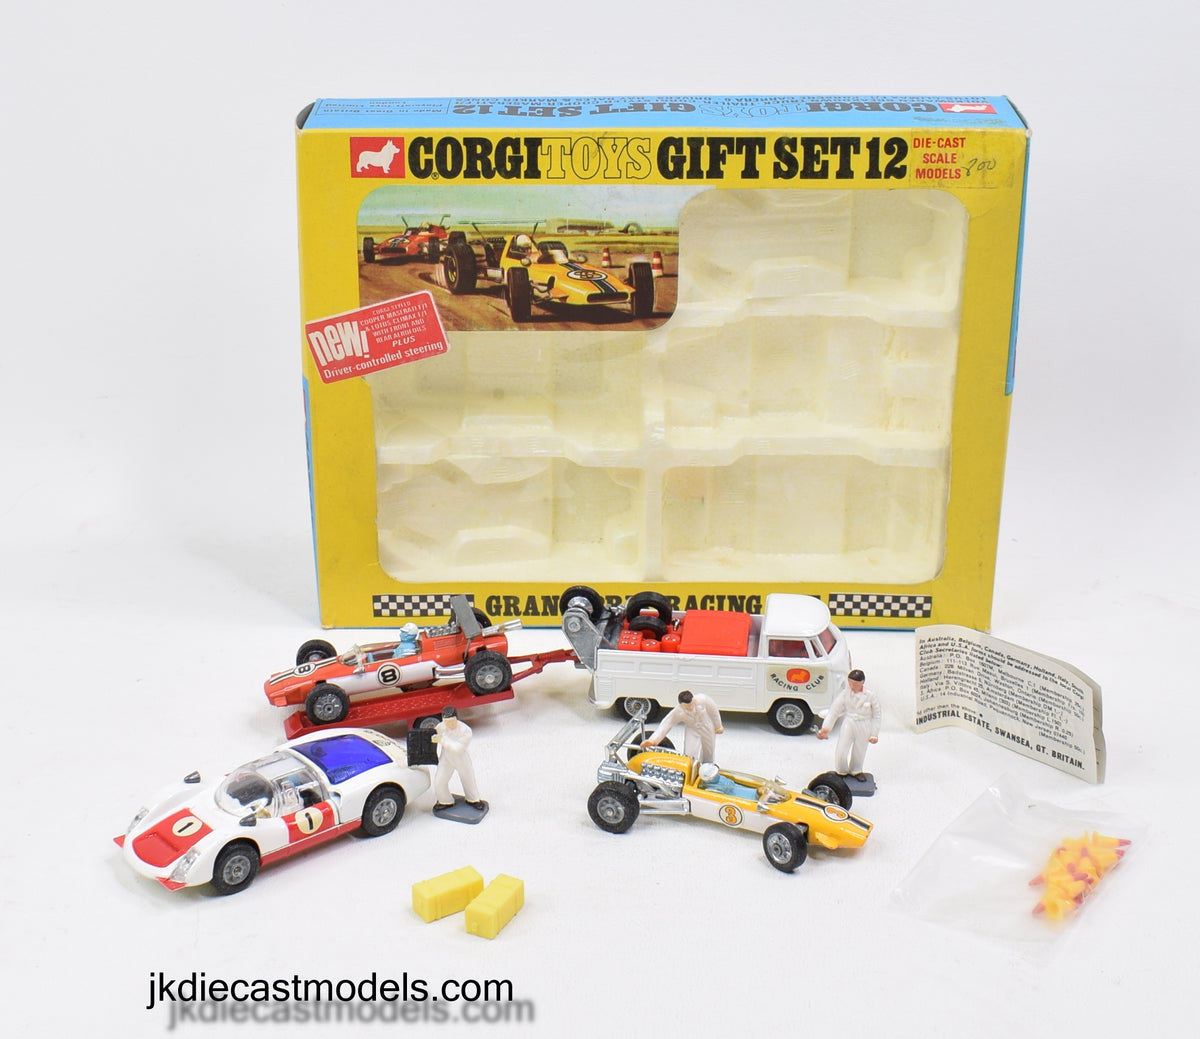 Corgi toys Gift set 12 'Grand Prix' Virtually Mint/Nice box (2nd issue)